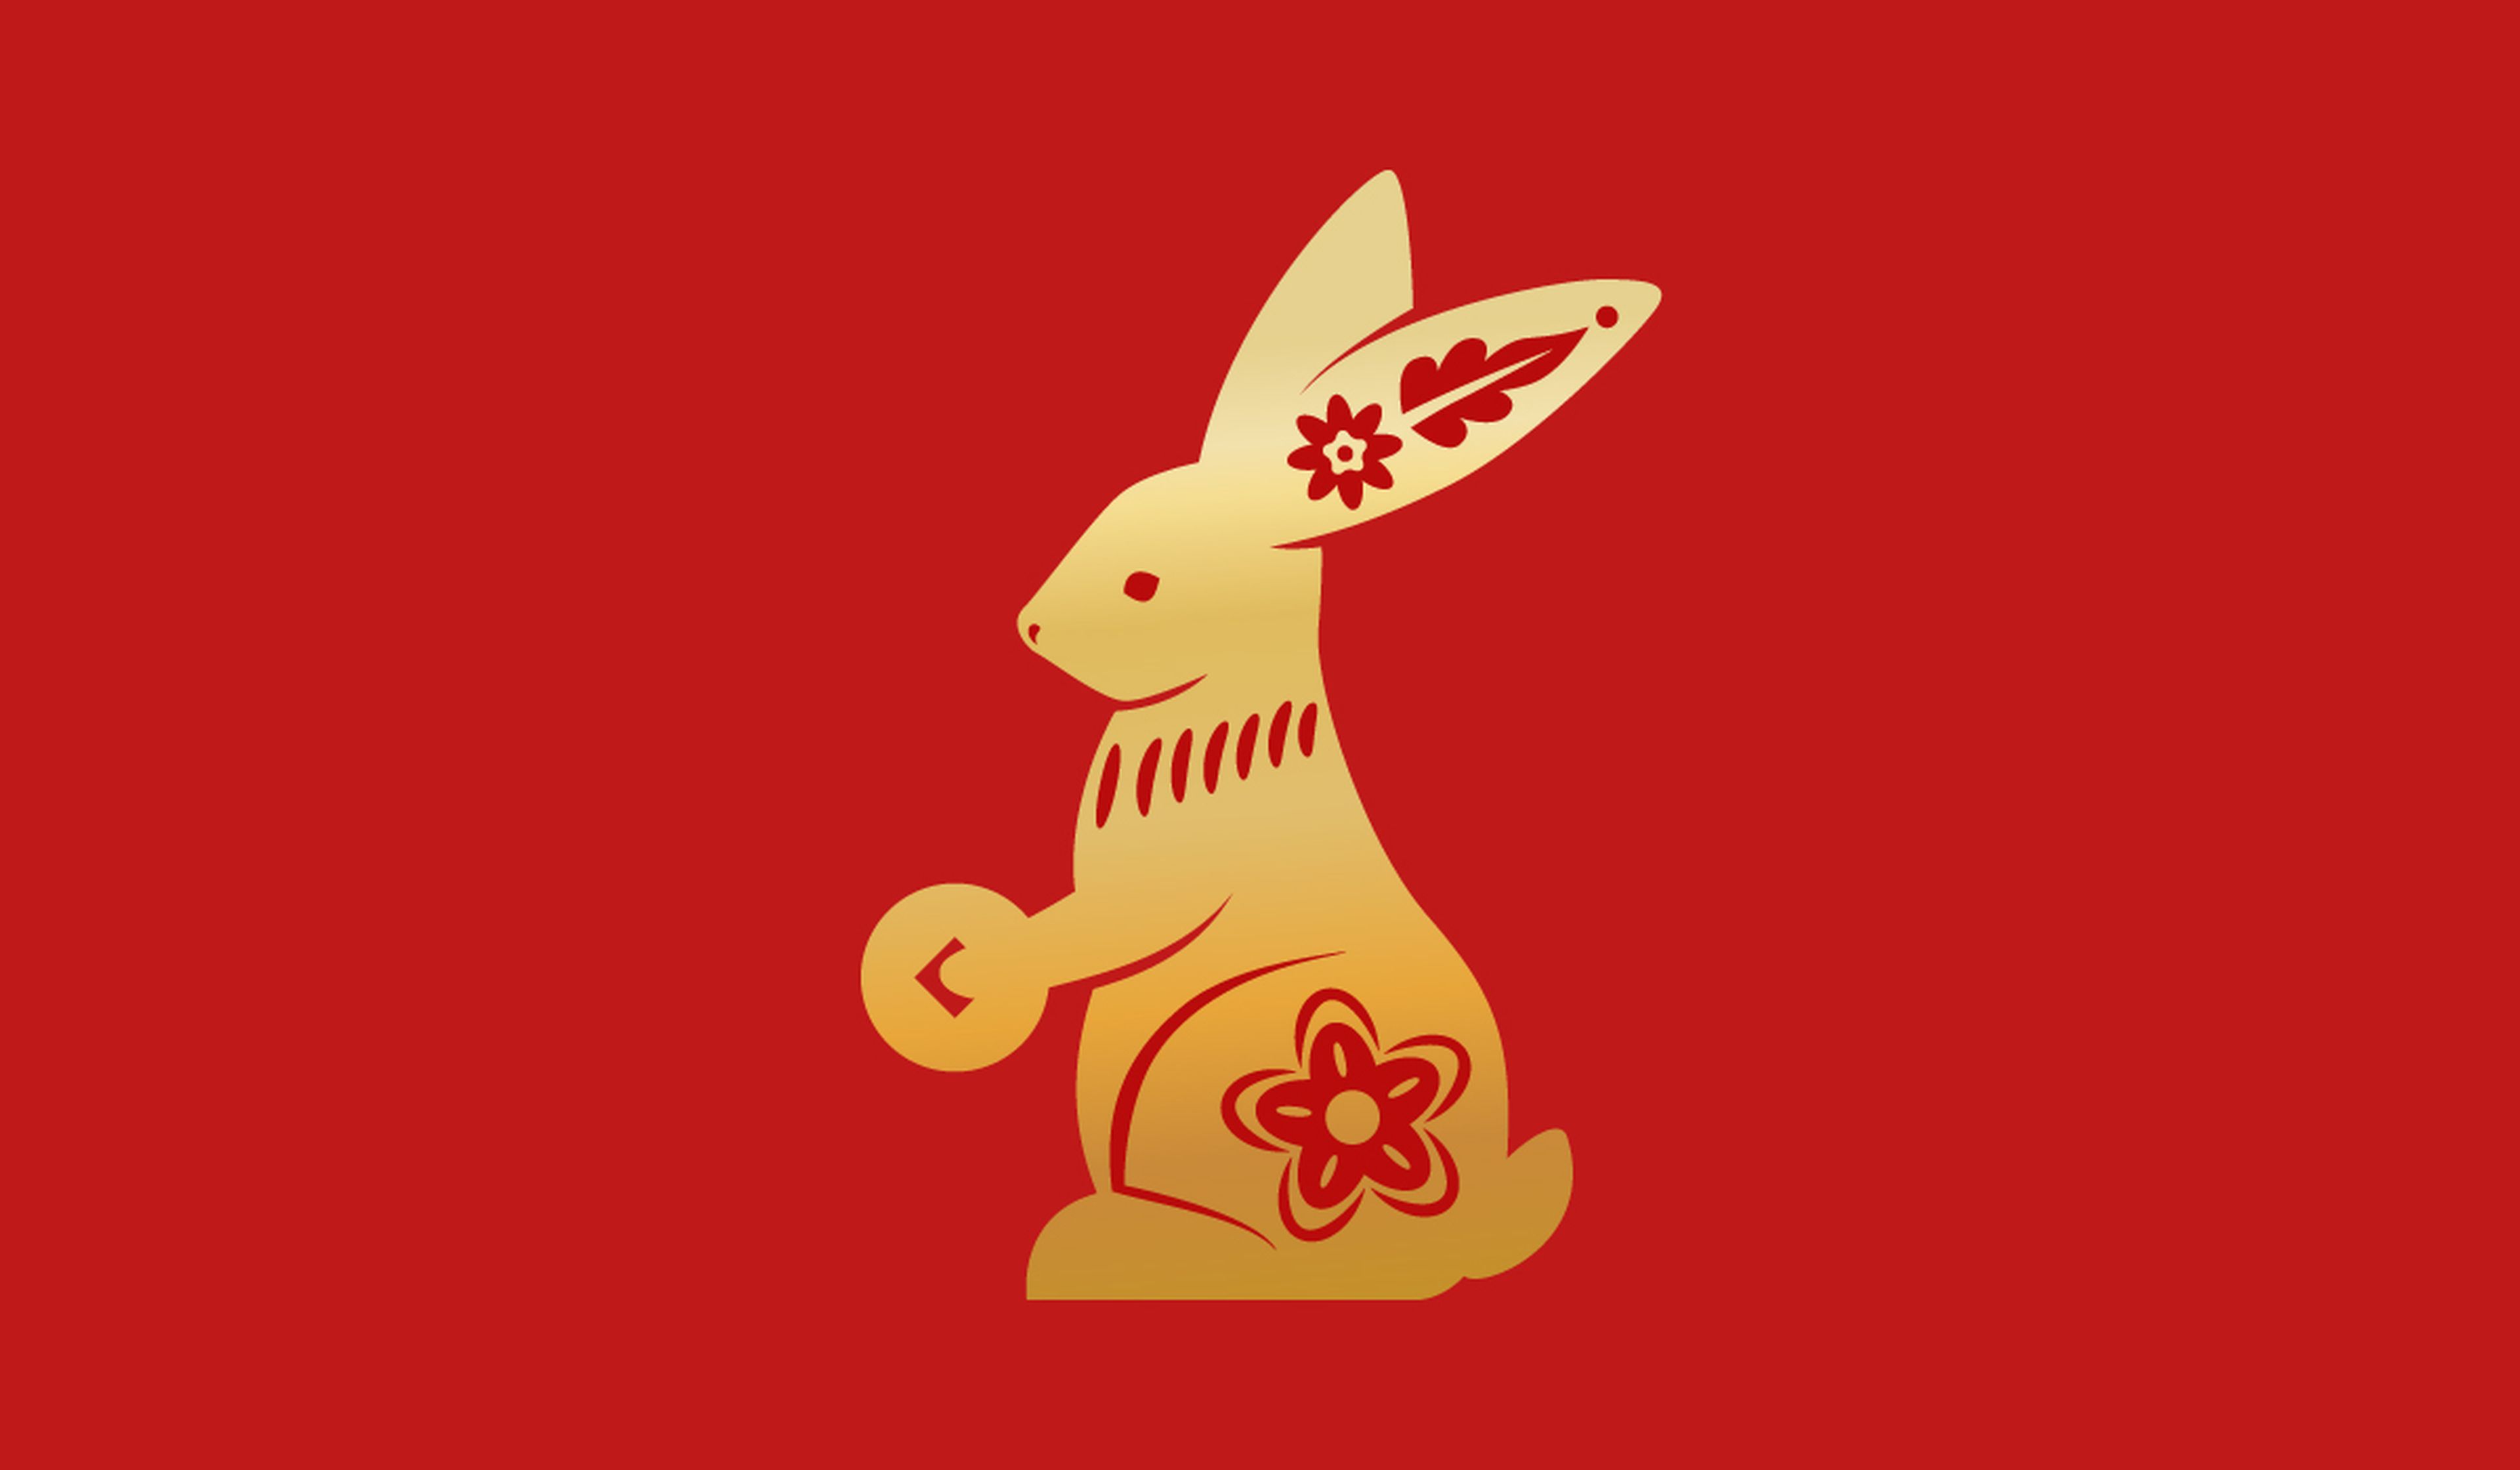 Horóscopo chino conejo